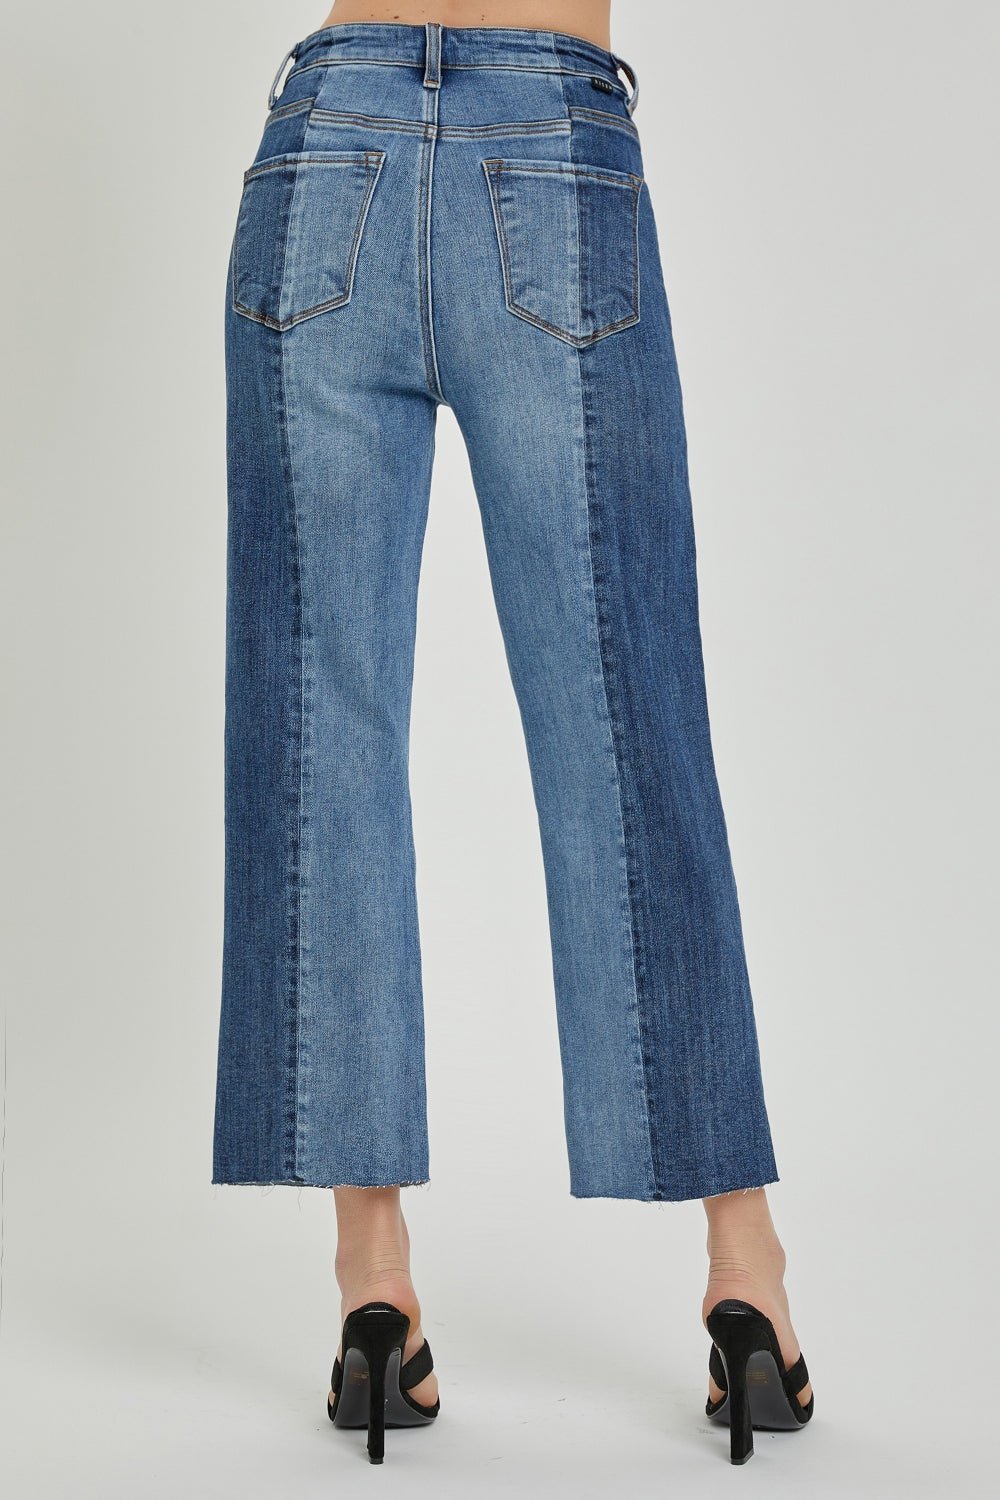 Mid-Rise Waist Two-Tones Jeans in Dark ComboJeansRISEN